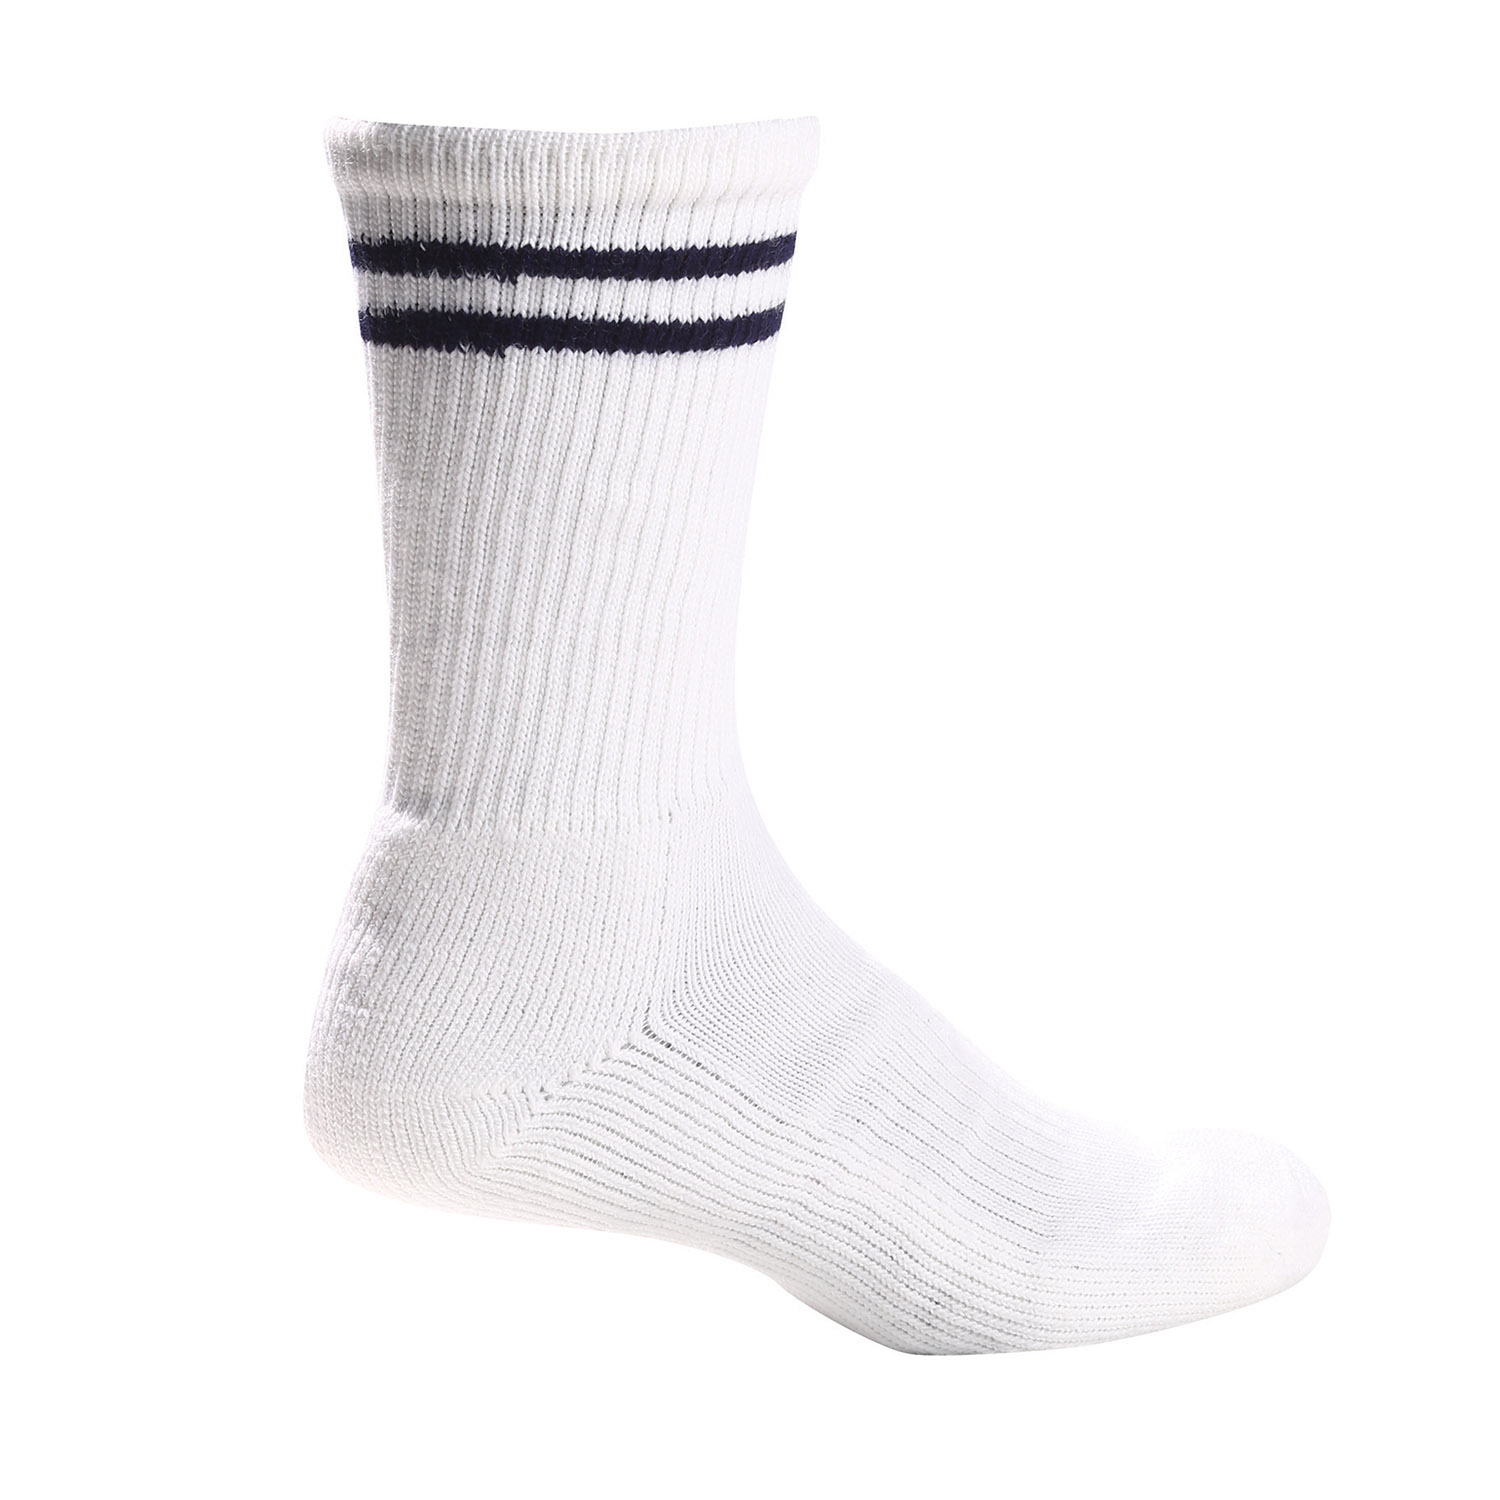 White Crew Length Socks with Spandex (S-603)